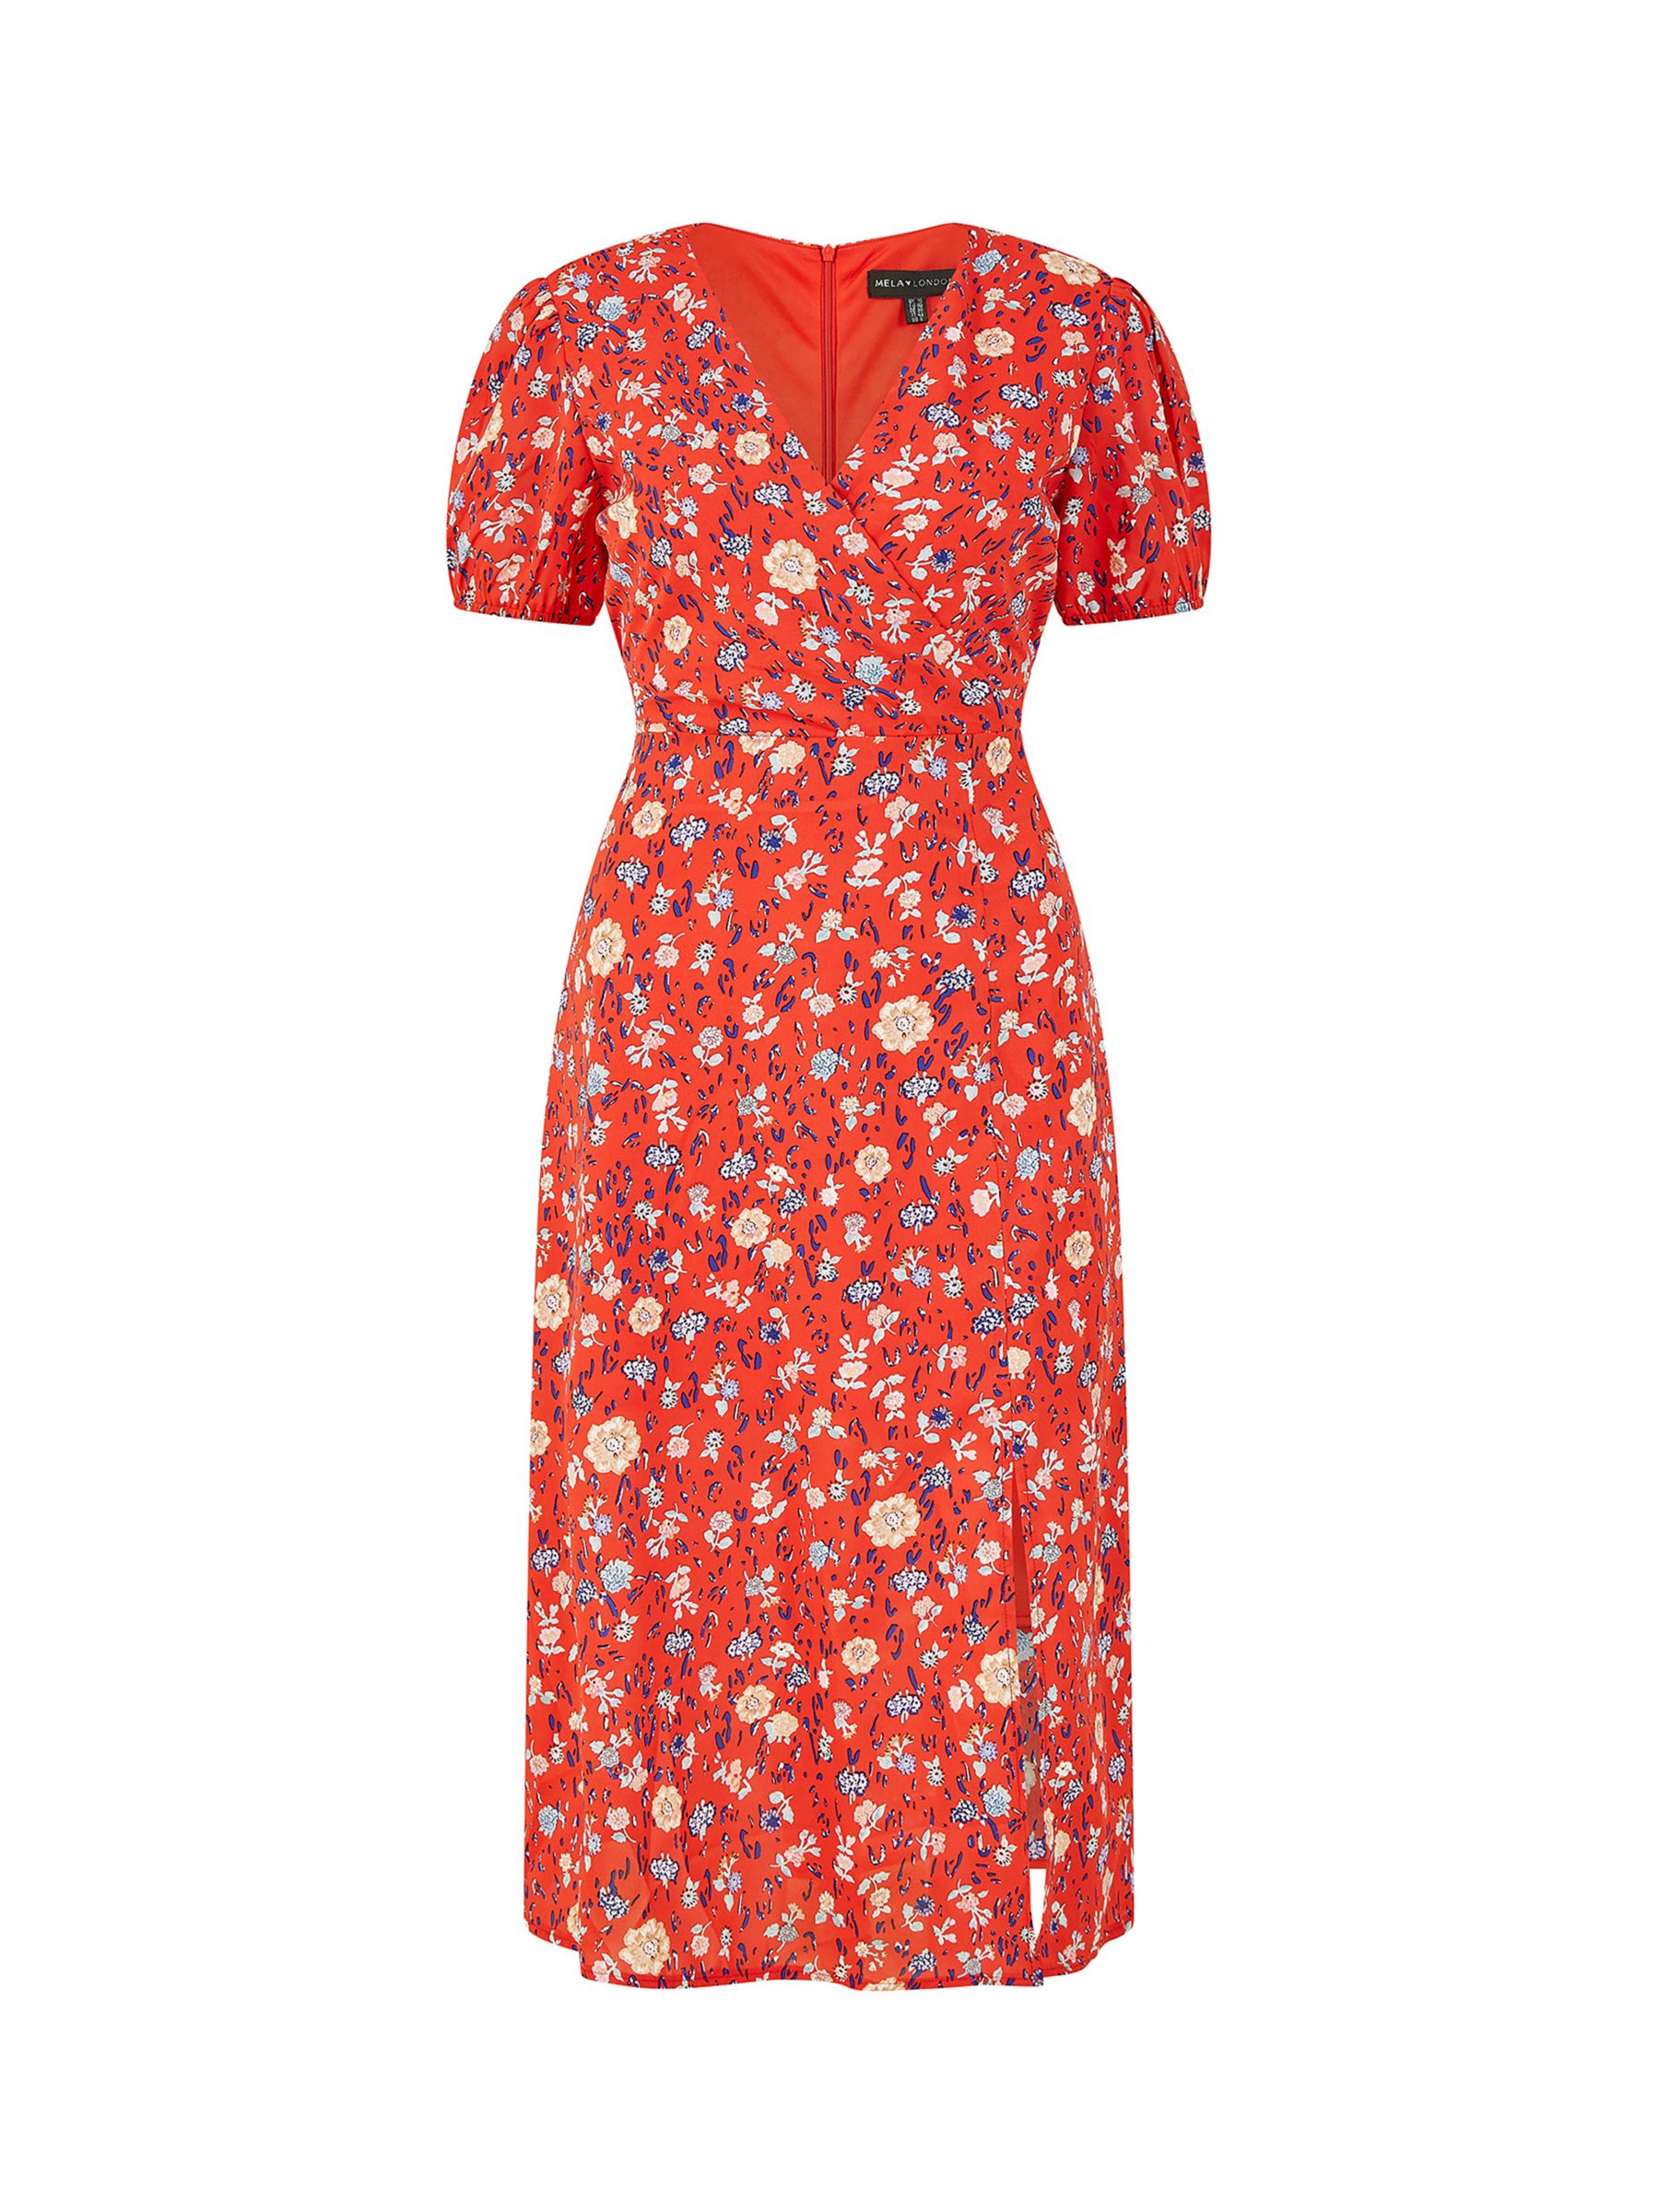 Mela London Floral Print Midi Dress, Red at John Lewis & Partners